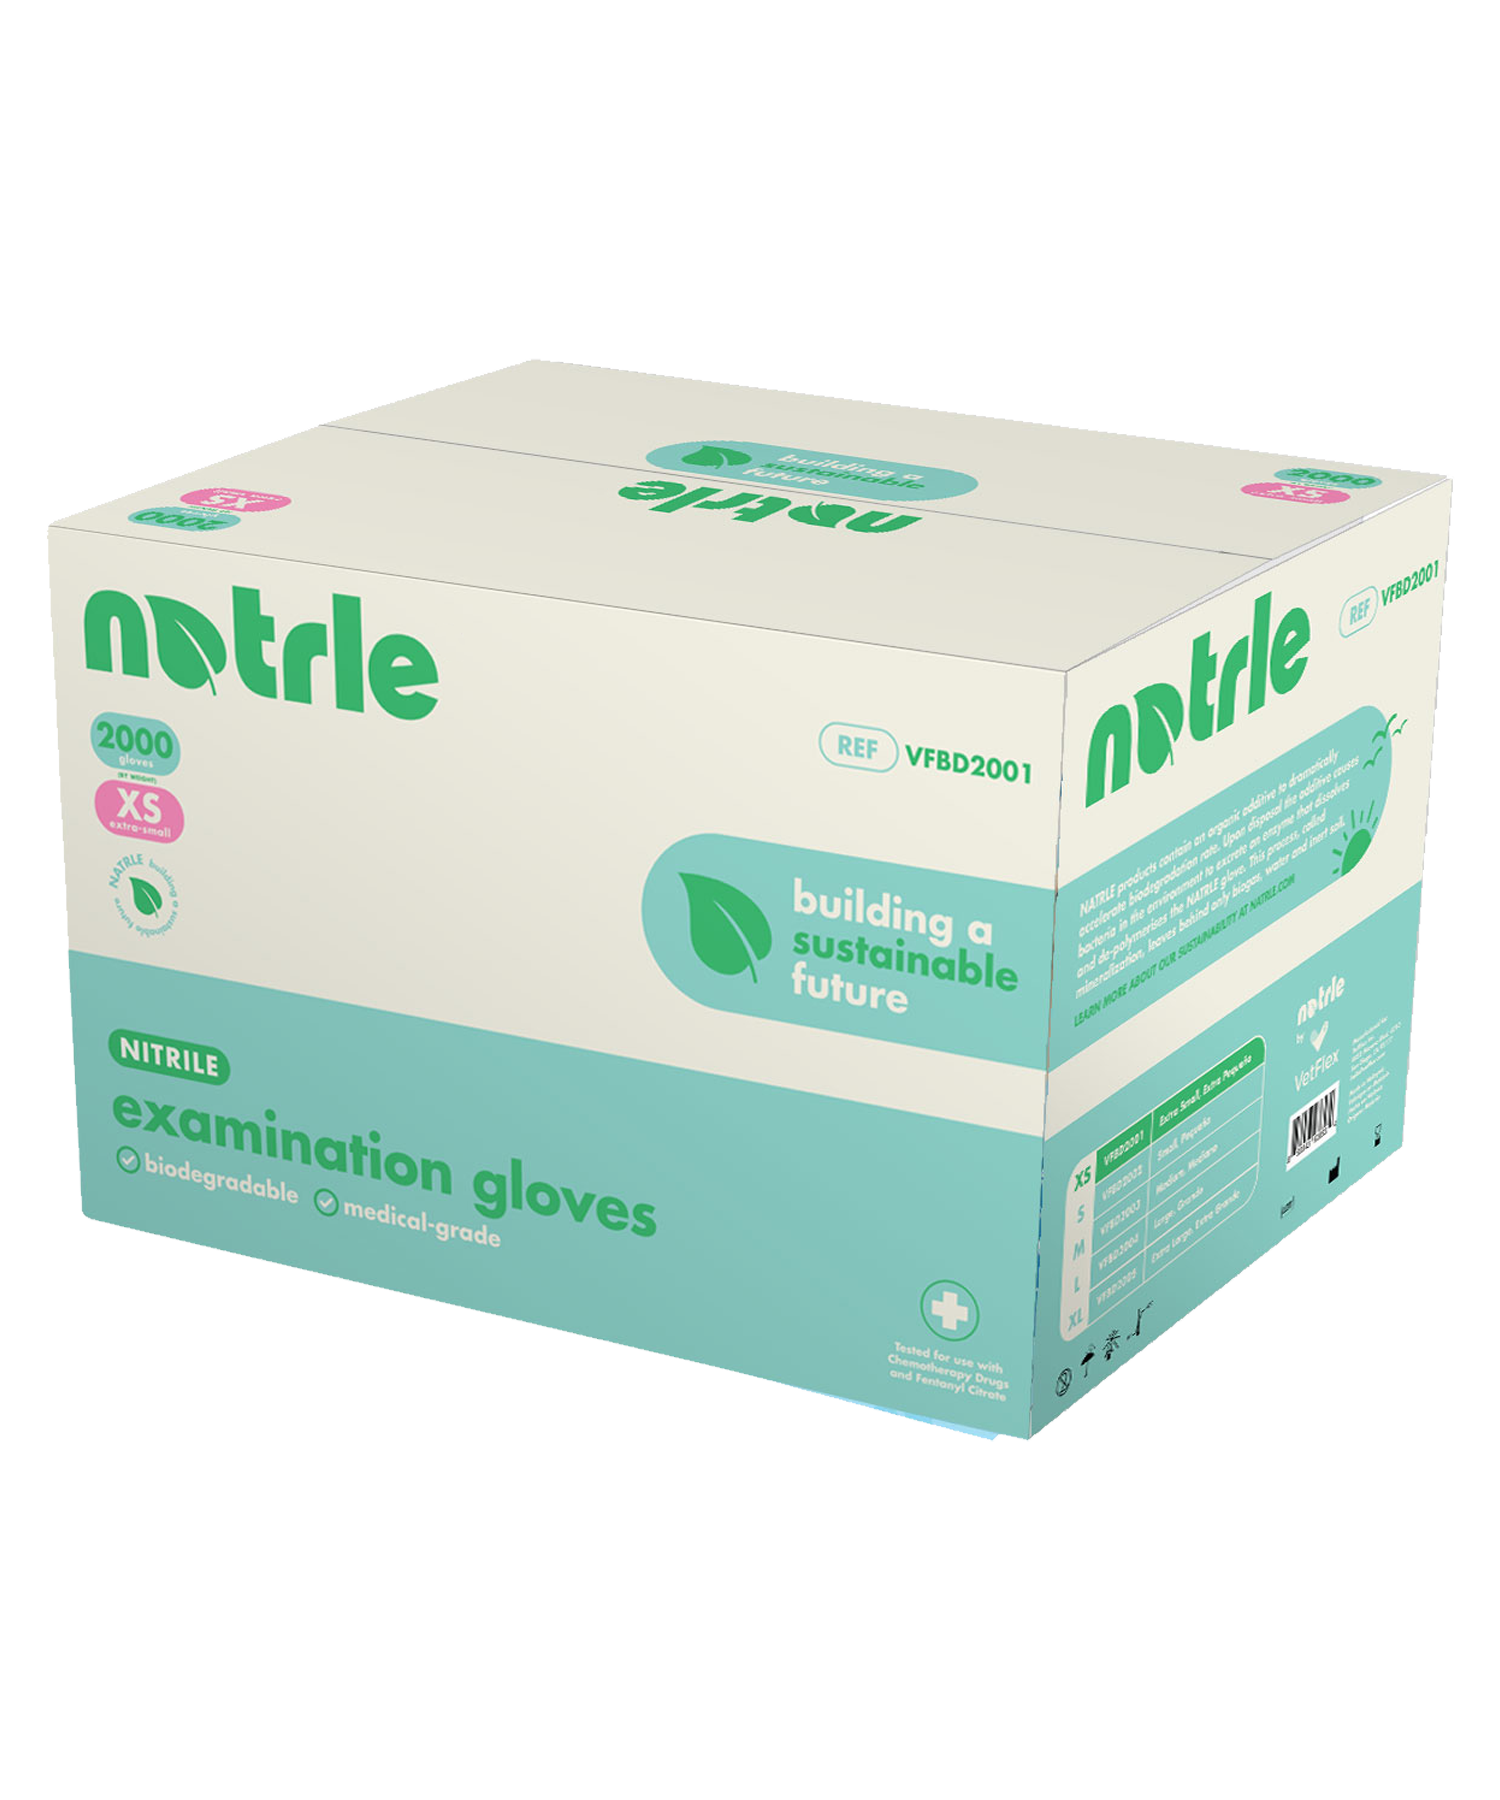 NATRLE Biodegradable Gloves (Case of 2000)